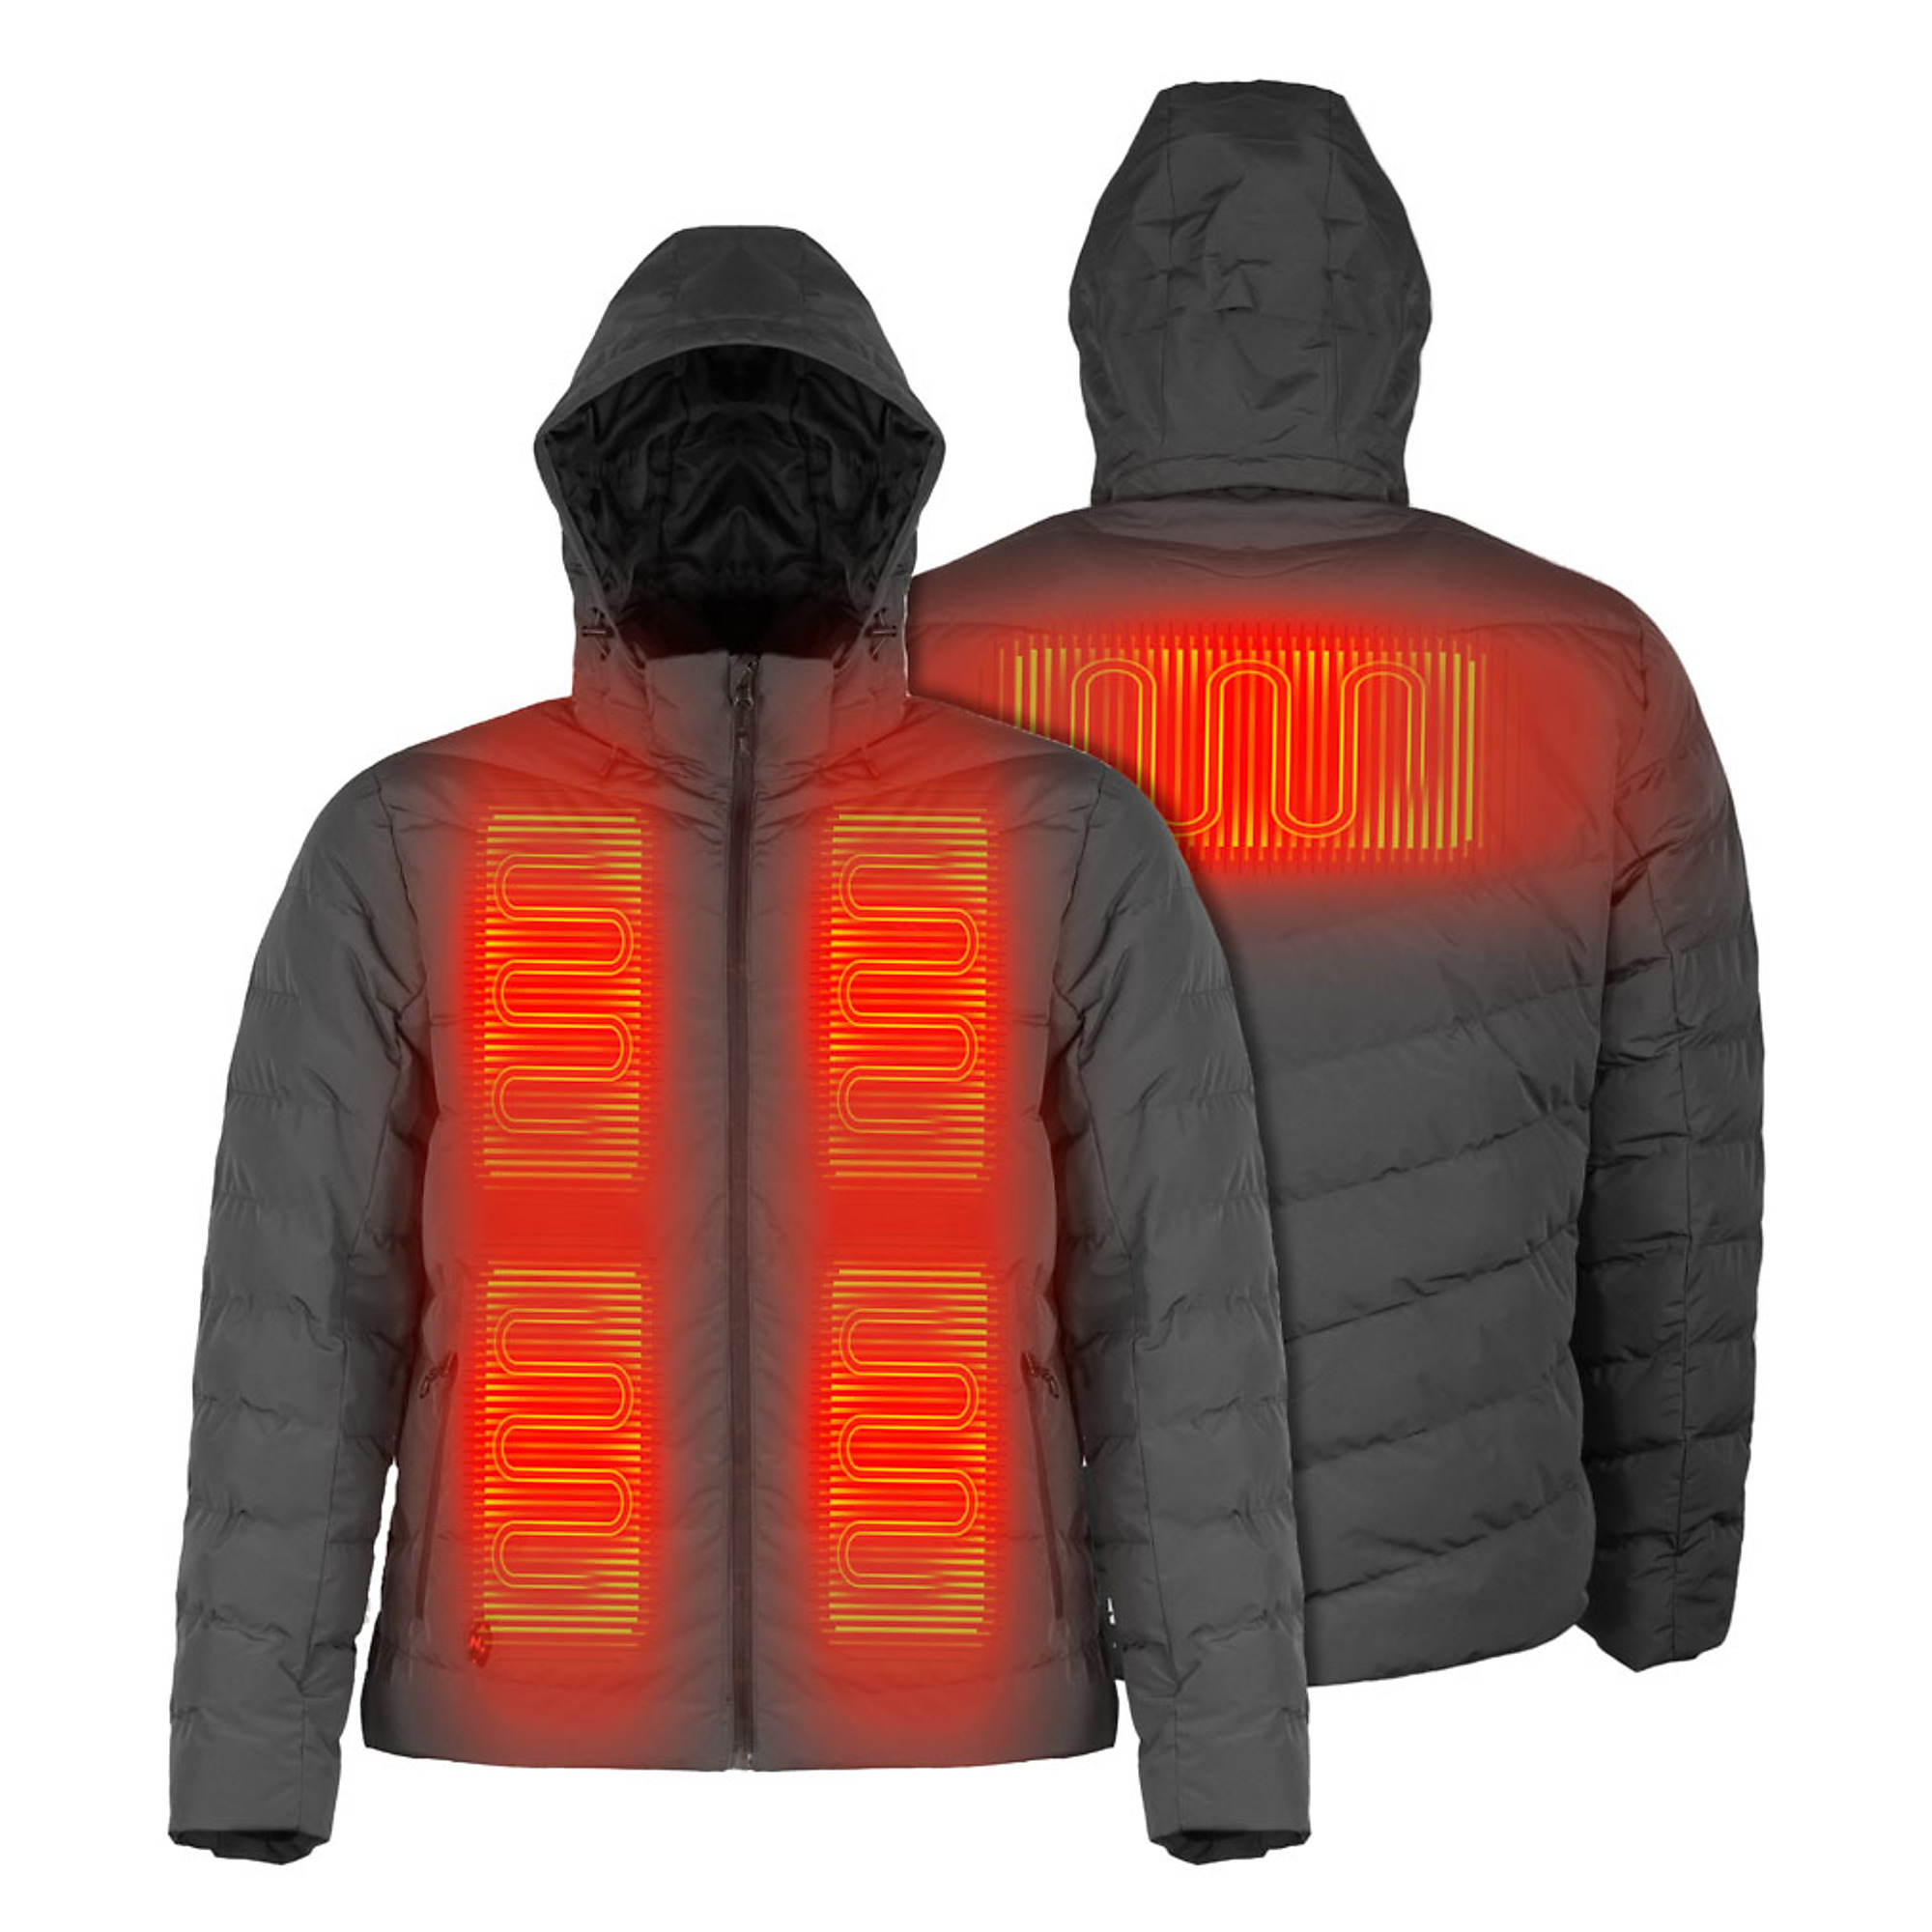 Fieldsheer, Men's Crest Heated Jacket with 7.4v Battery, Size L, Color Black, Model MWMJ37010422